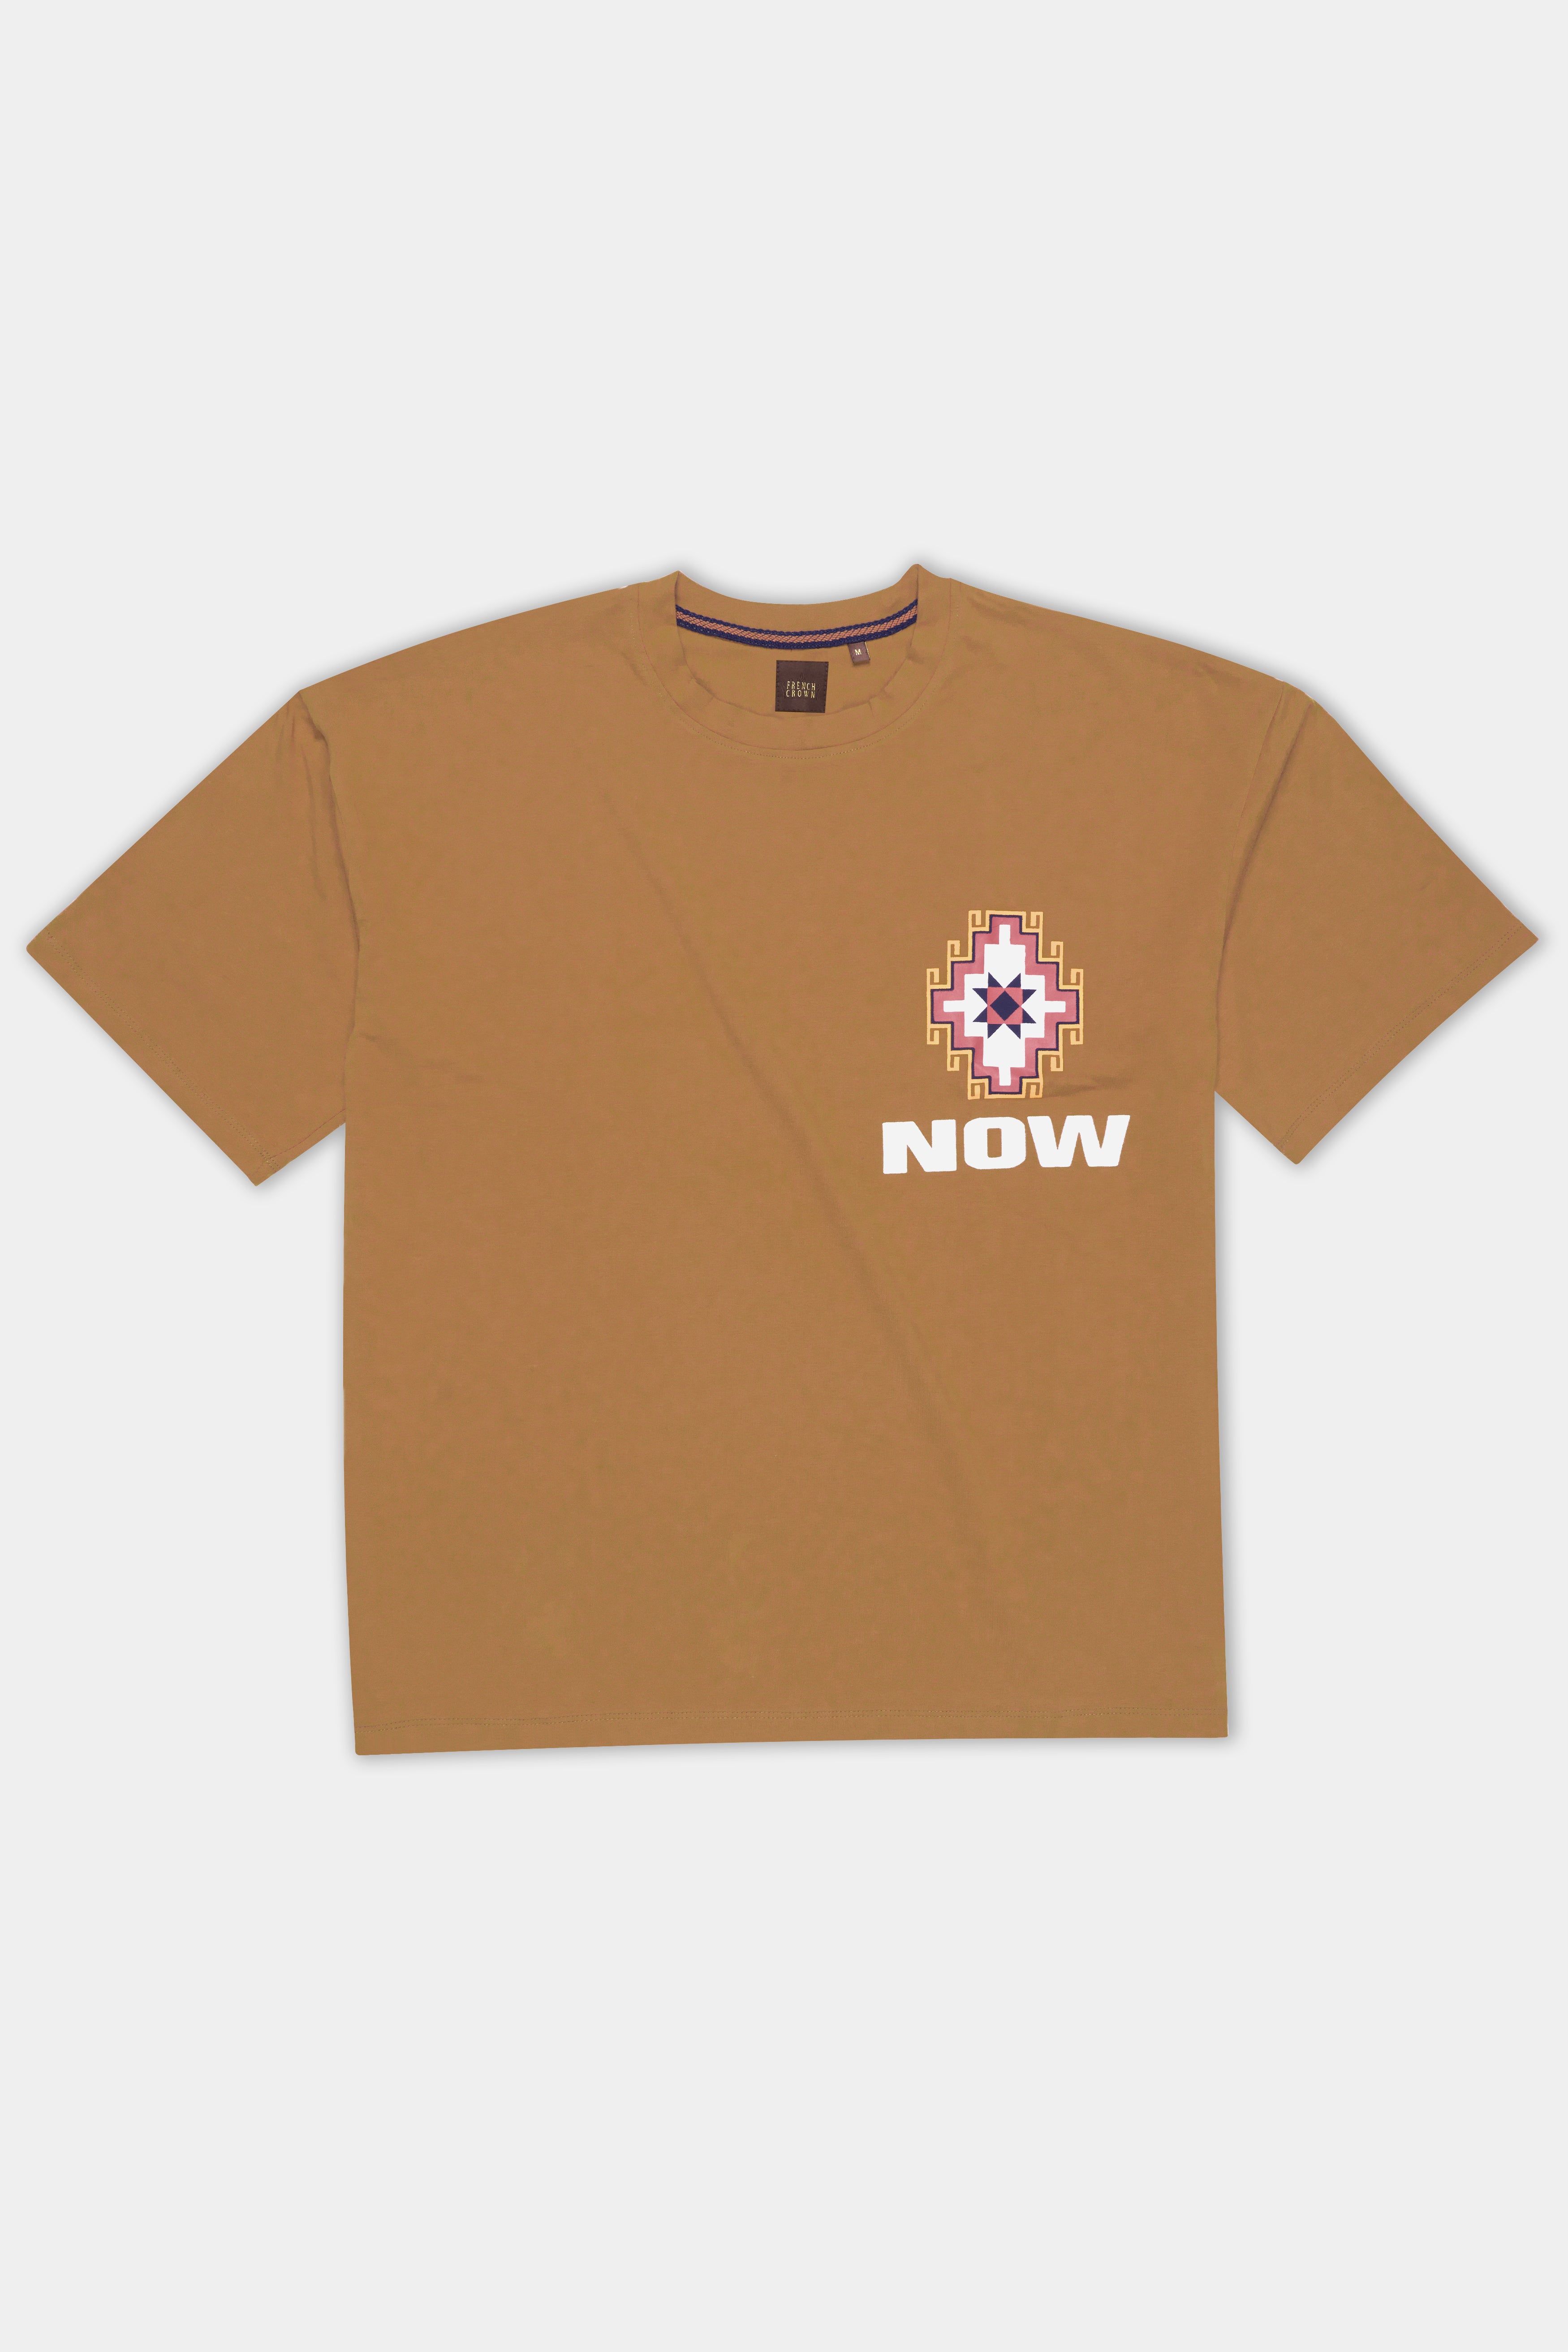 Sepia Brown Printed Premium Cotton Oversized T-shirt TS951-S, TS951-M, TS951-L, TS951-XL, TS951-XXL